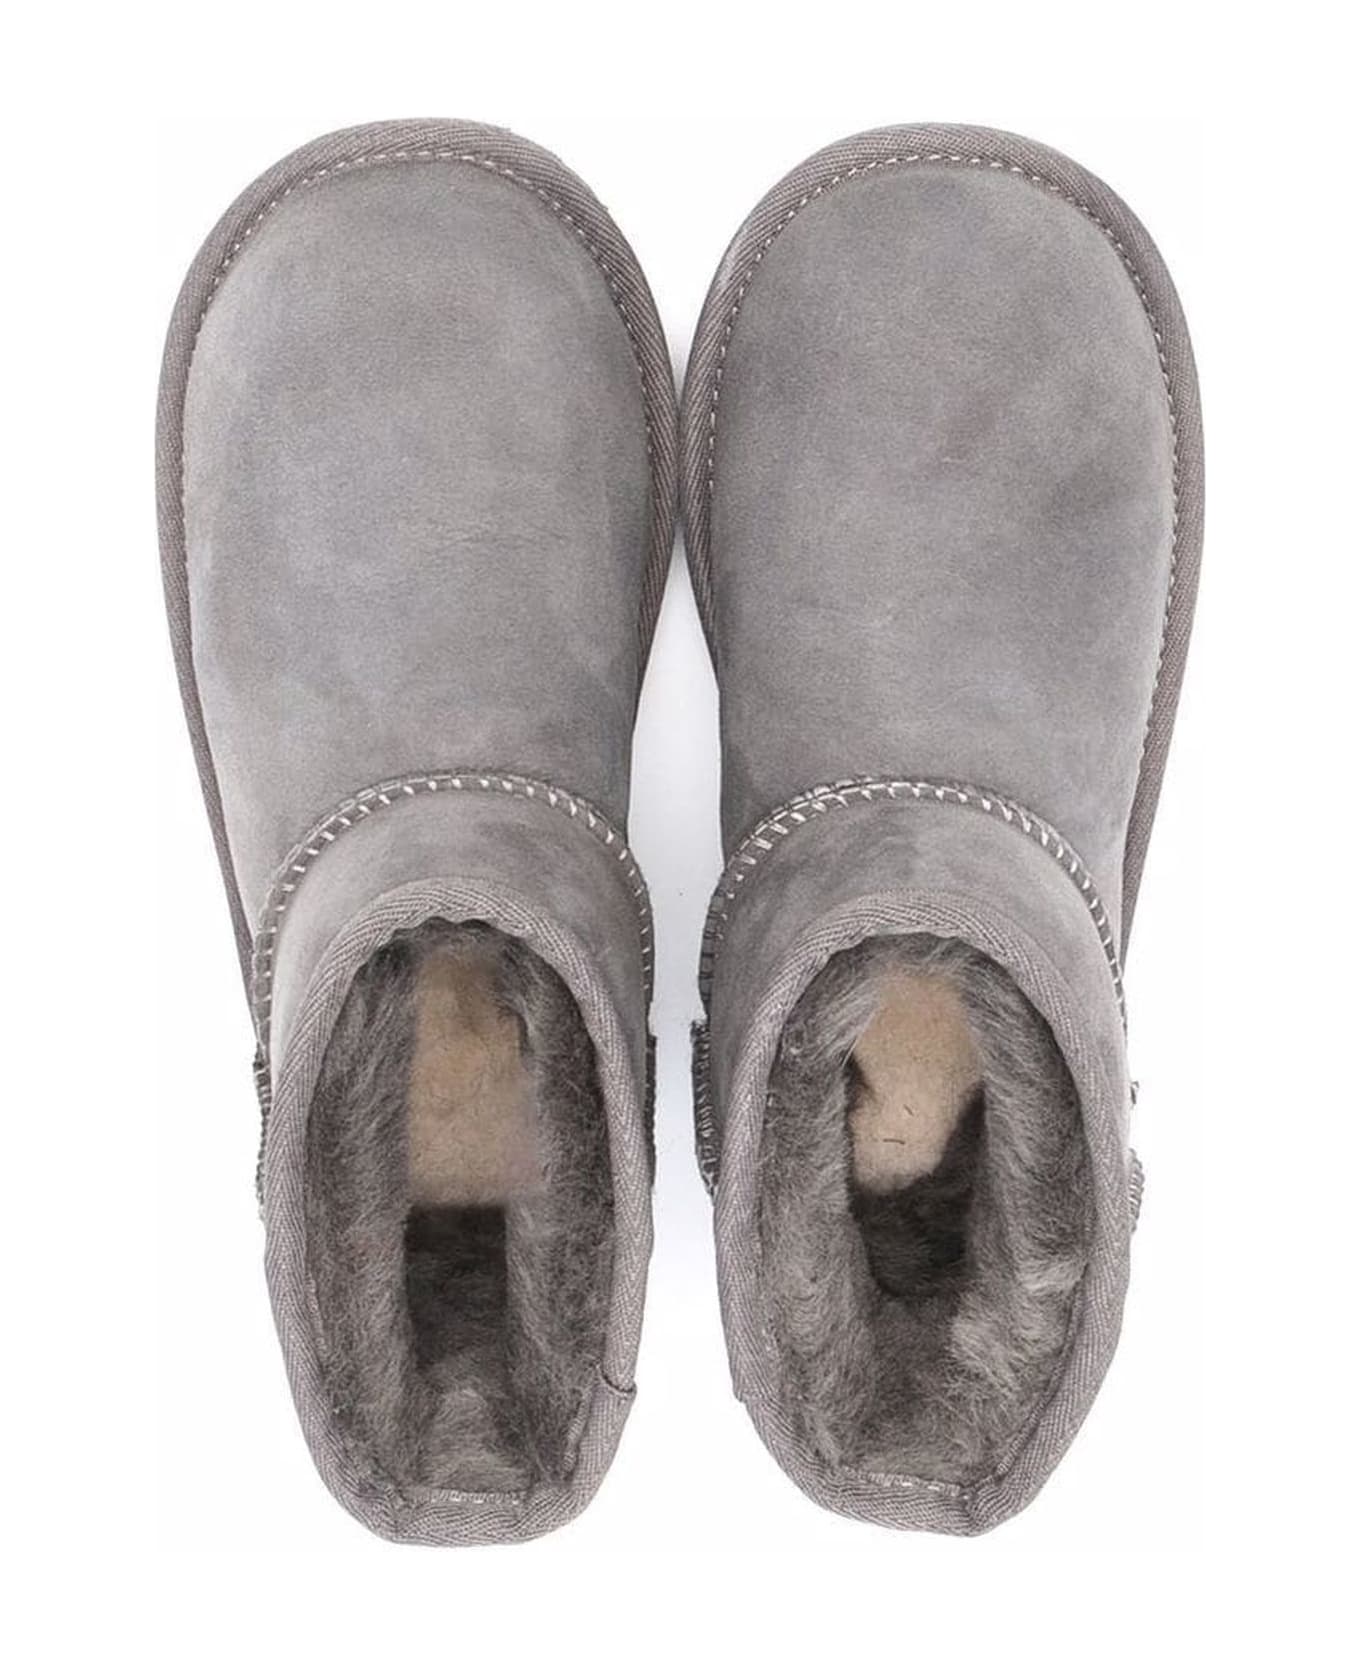 UGG Kids Boots Grey - Grey